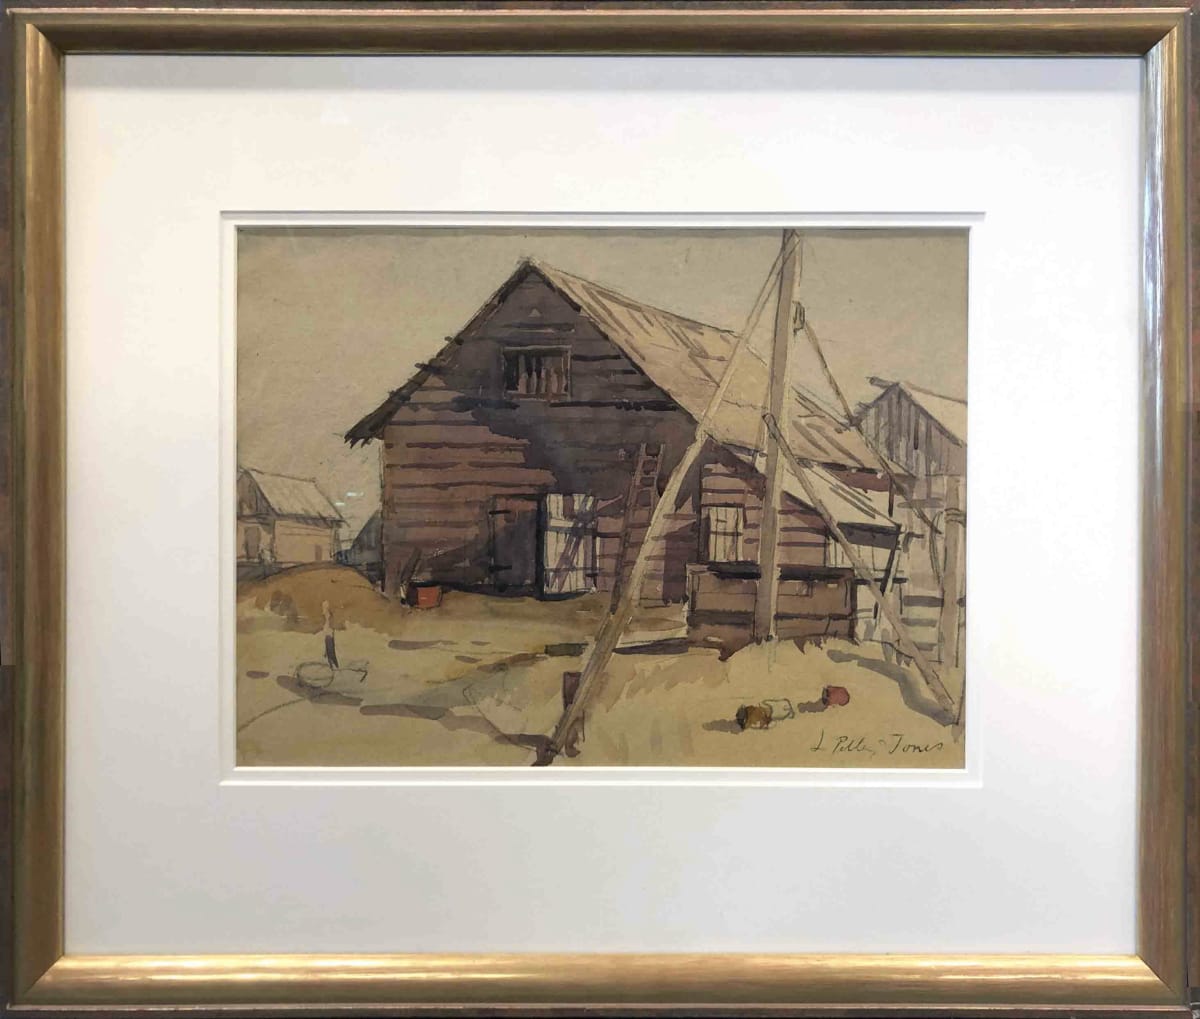 2911 -Old Barn by Llewellyn Petley-Jones (1908-1986) 